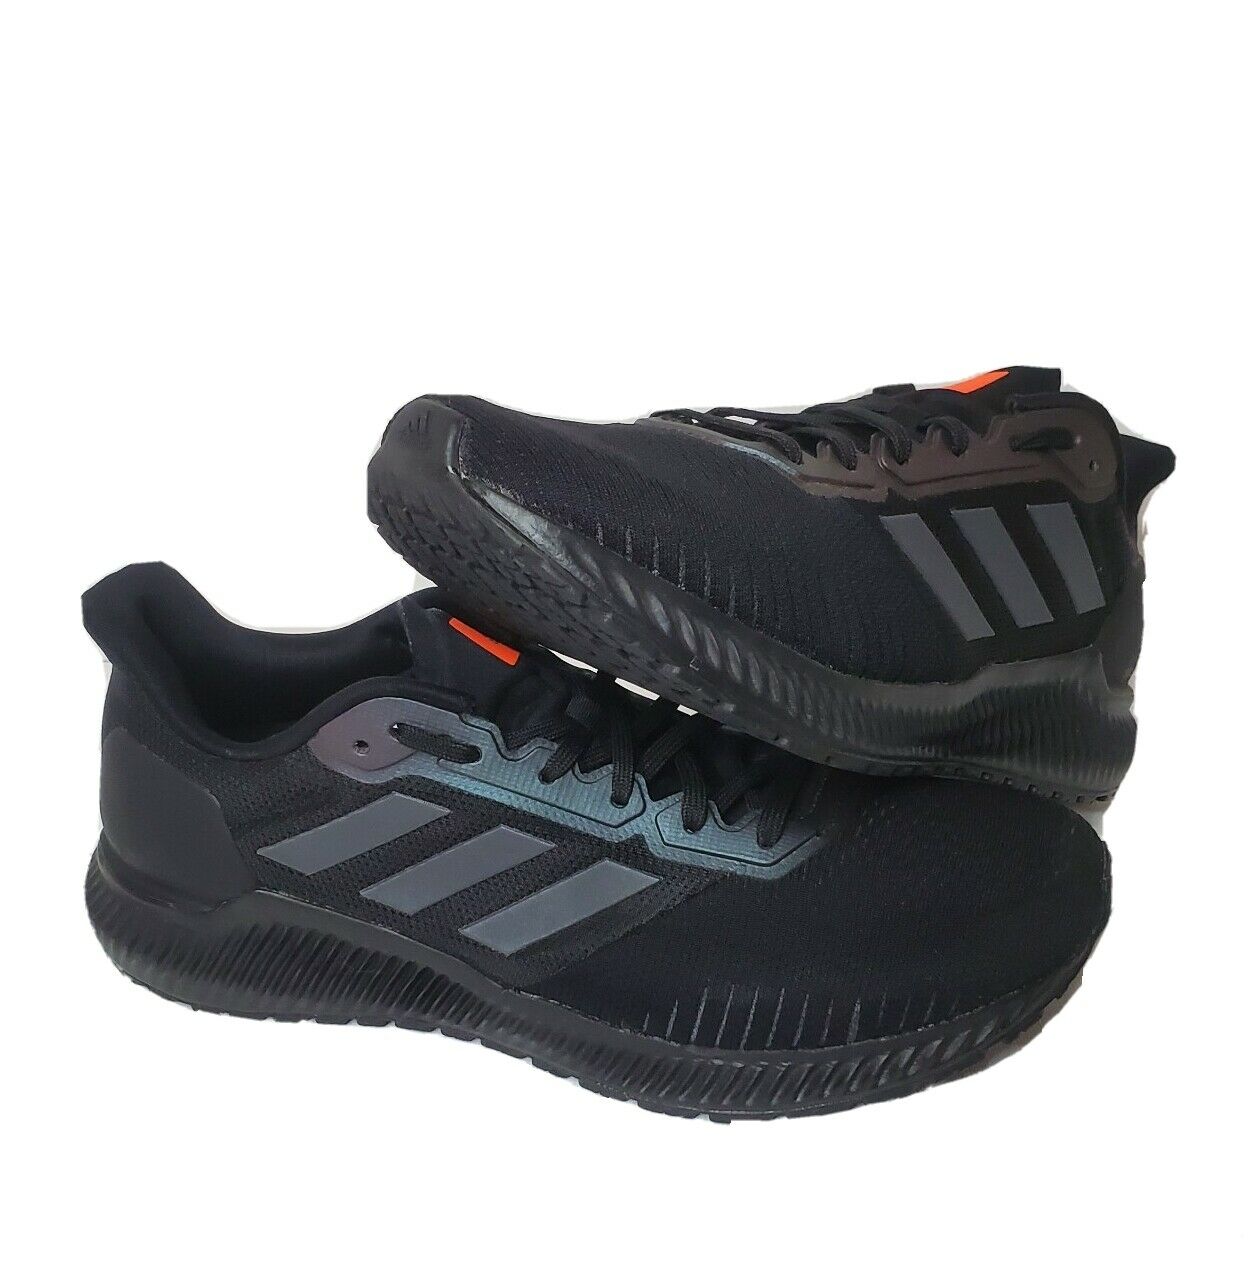 Adidas Solar Ride Running Shoes Black & Gray Men's Size 8.5